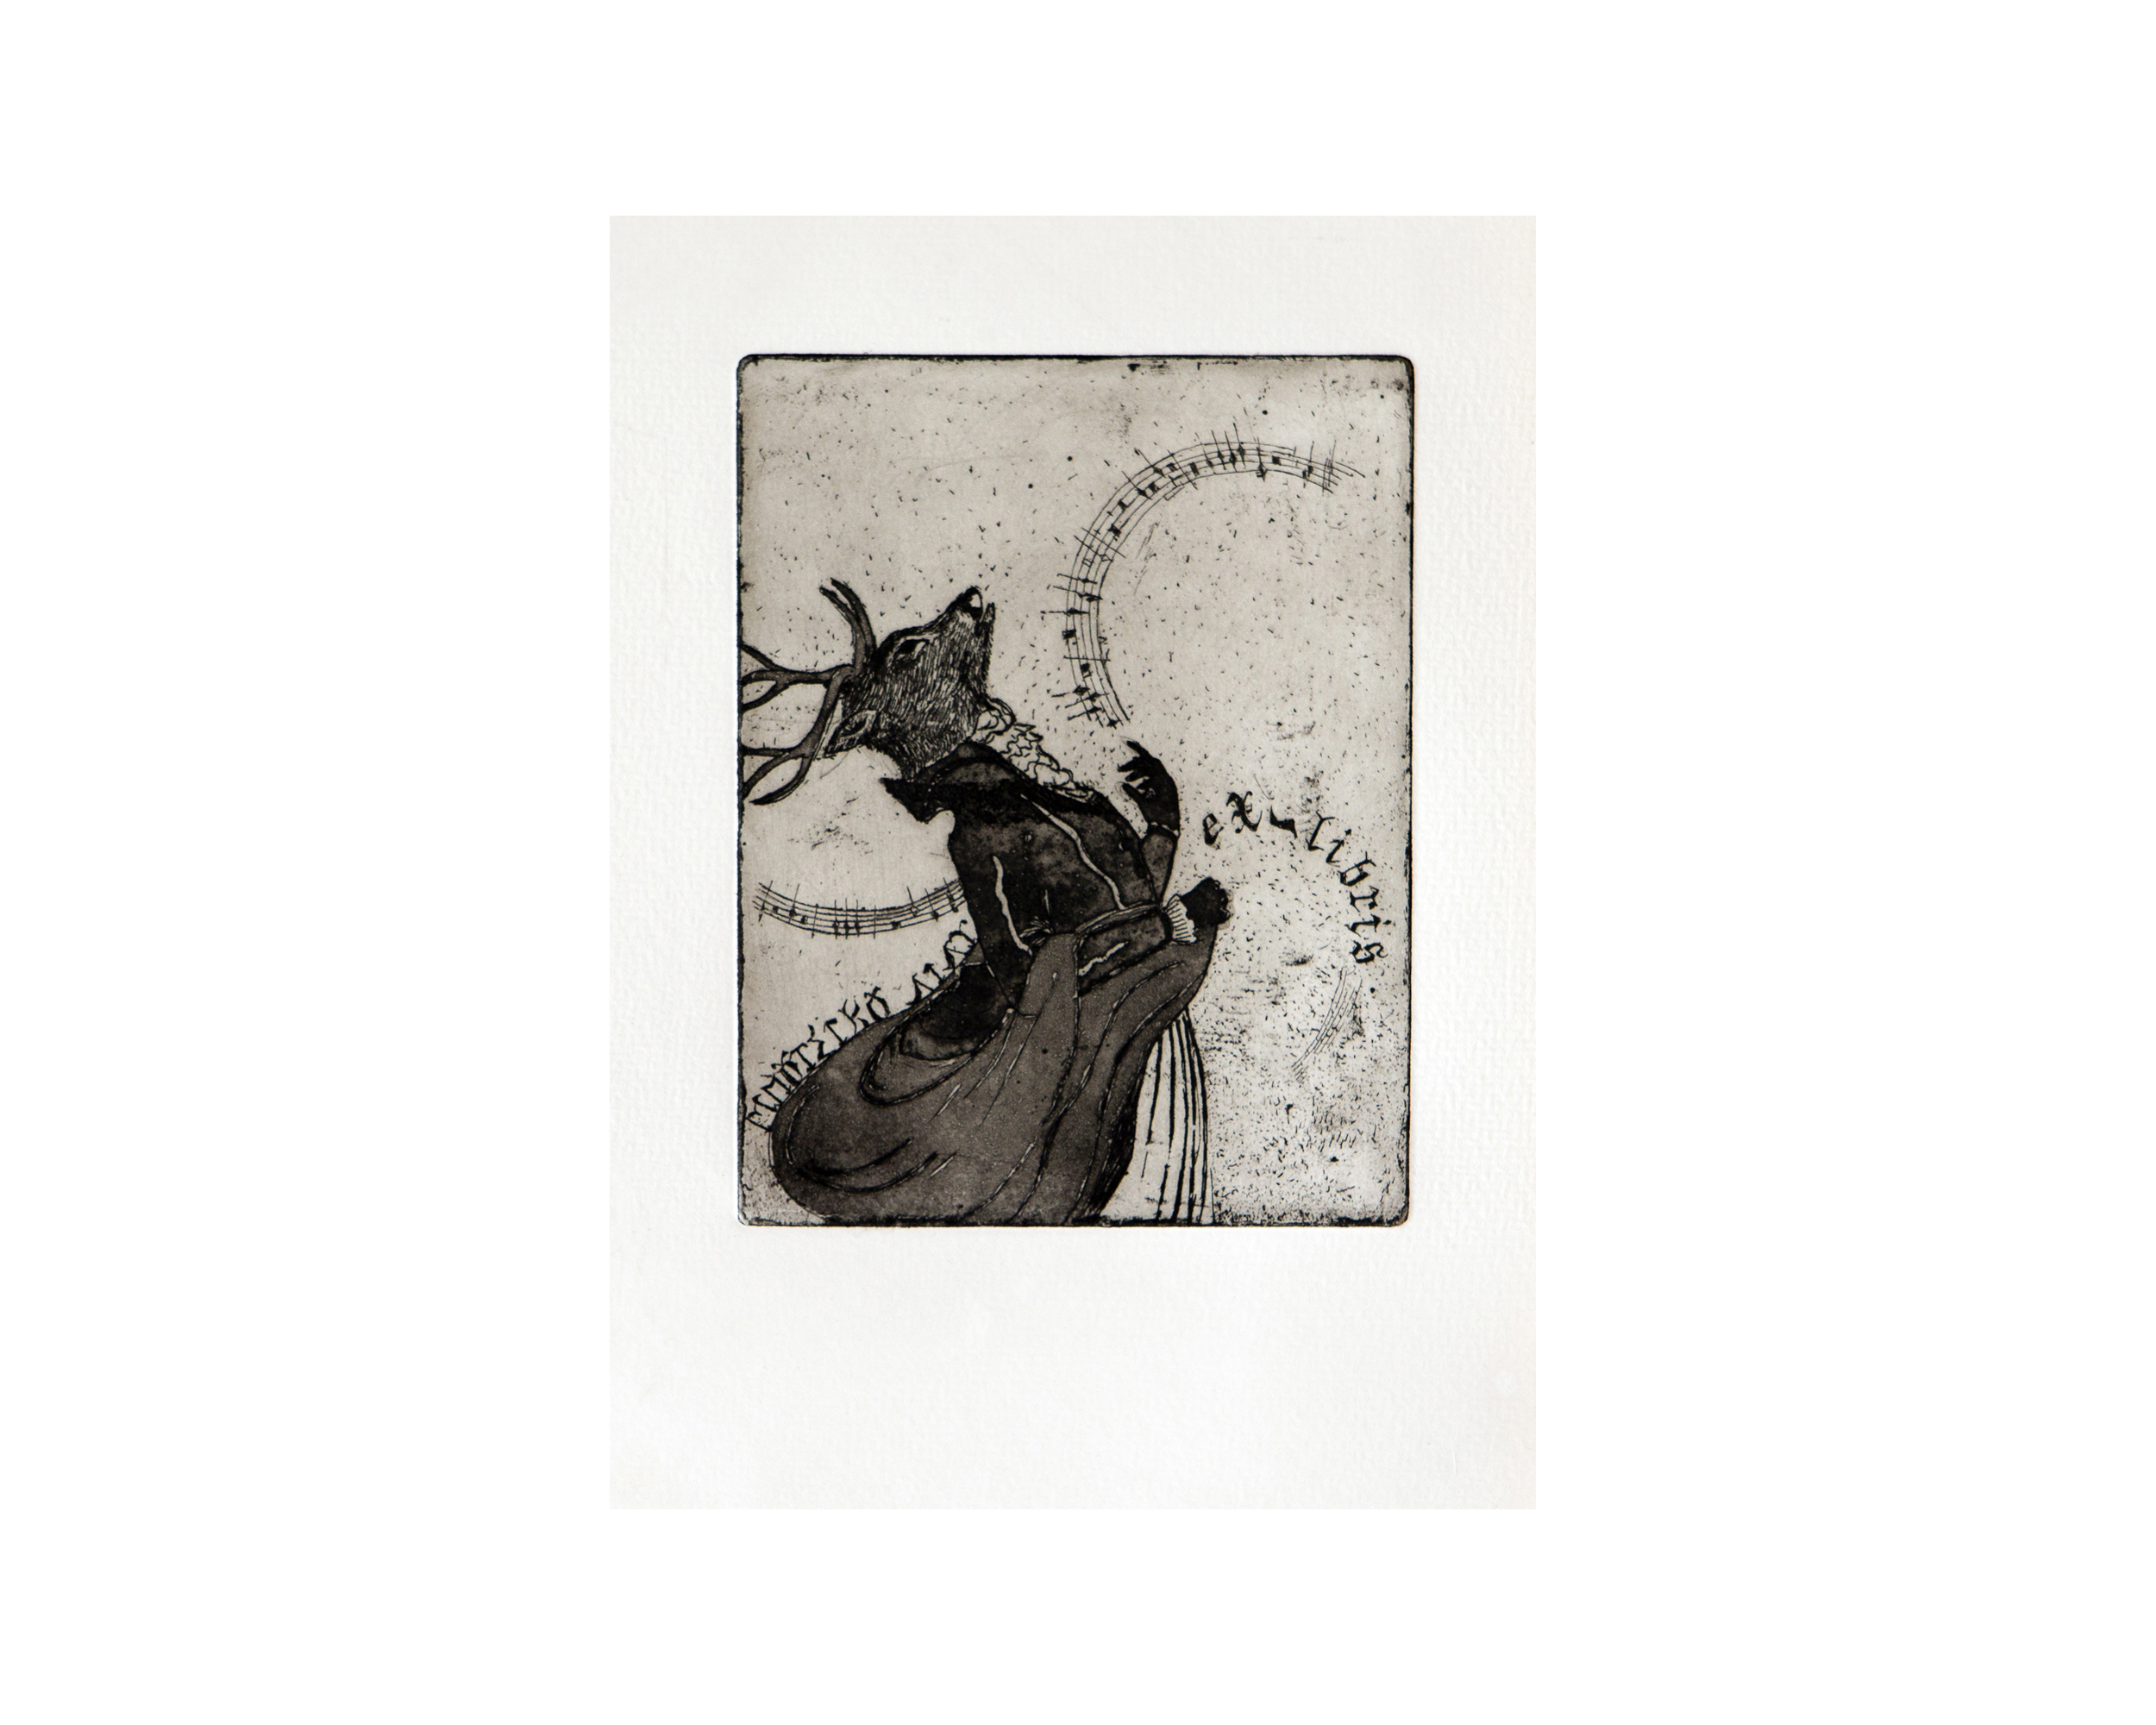 Ex Libris, limited edition etching print, aquatint, eau forte 10 x 13 cm 2008